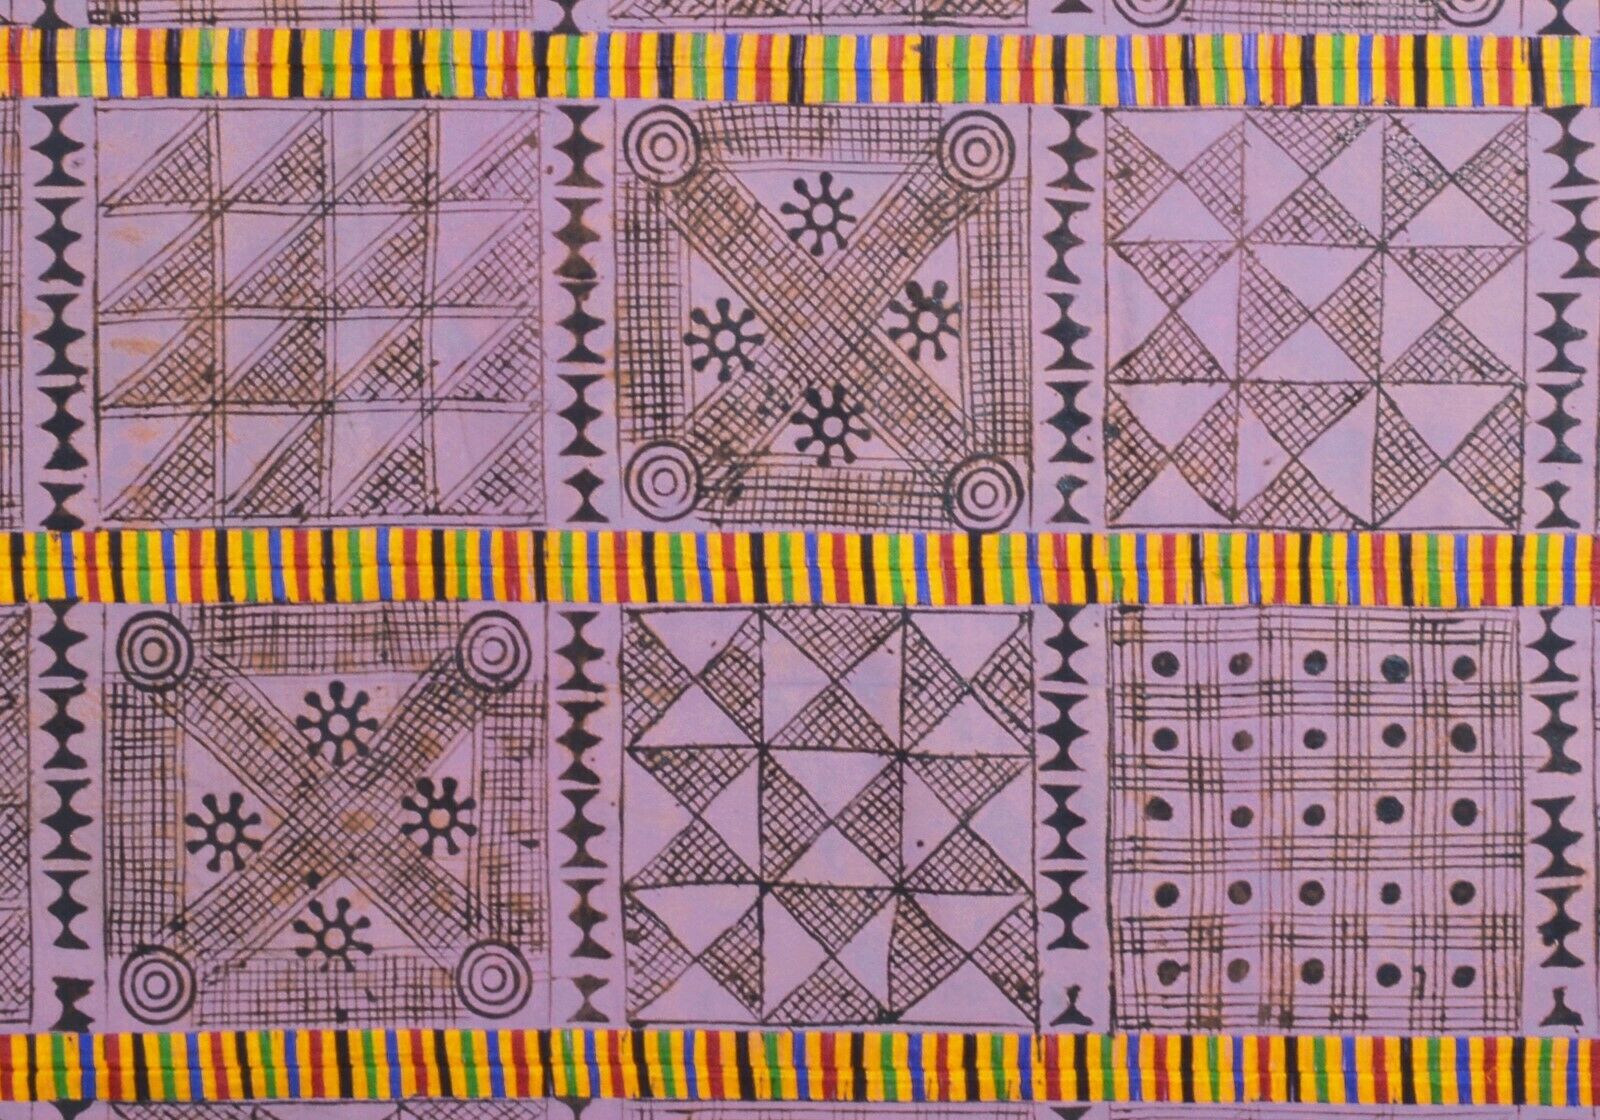 Variety of Adinkra Symbols cloth Ghana African hand stamped - Tribalgh